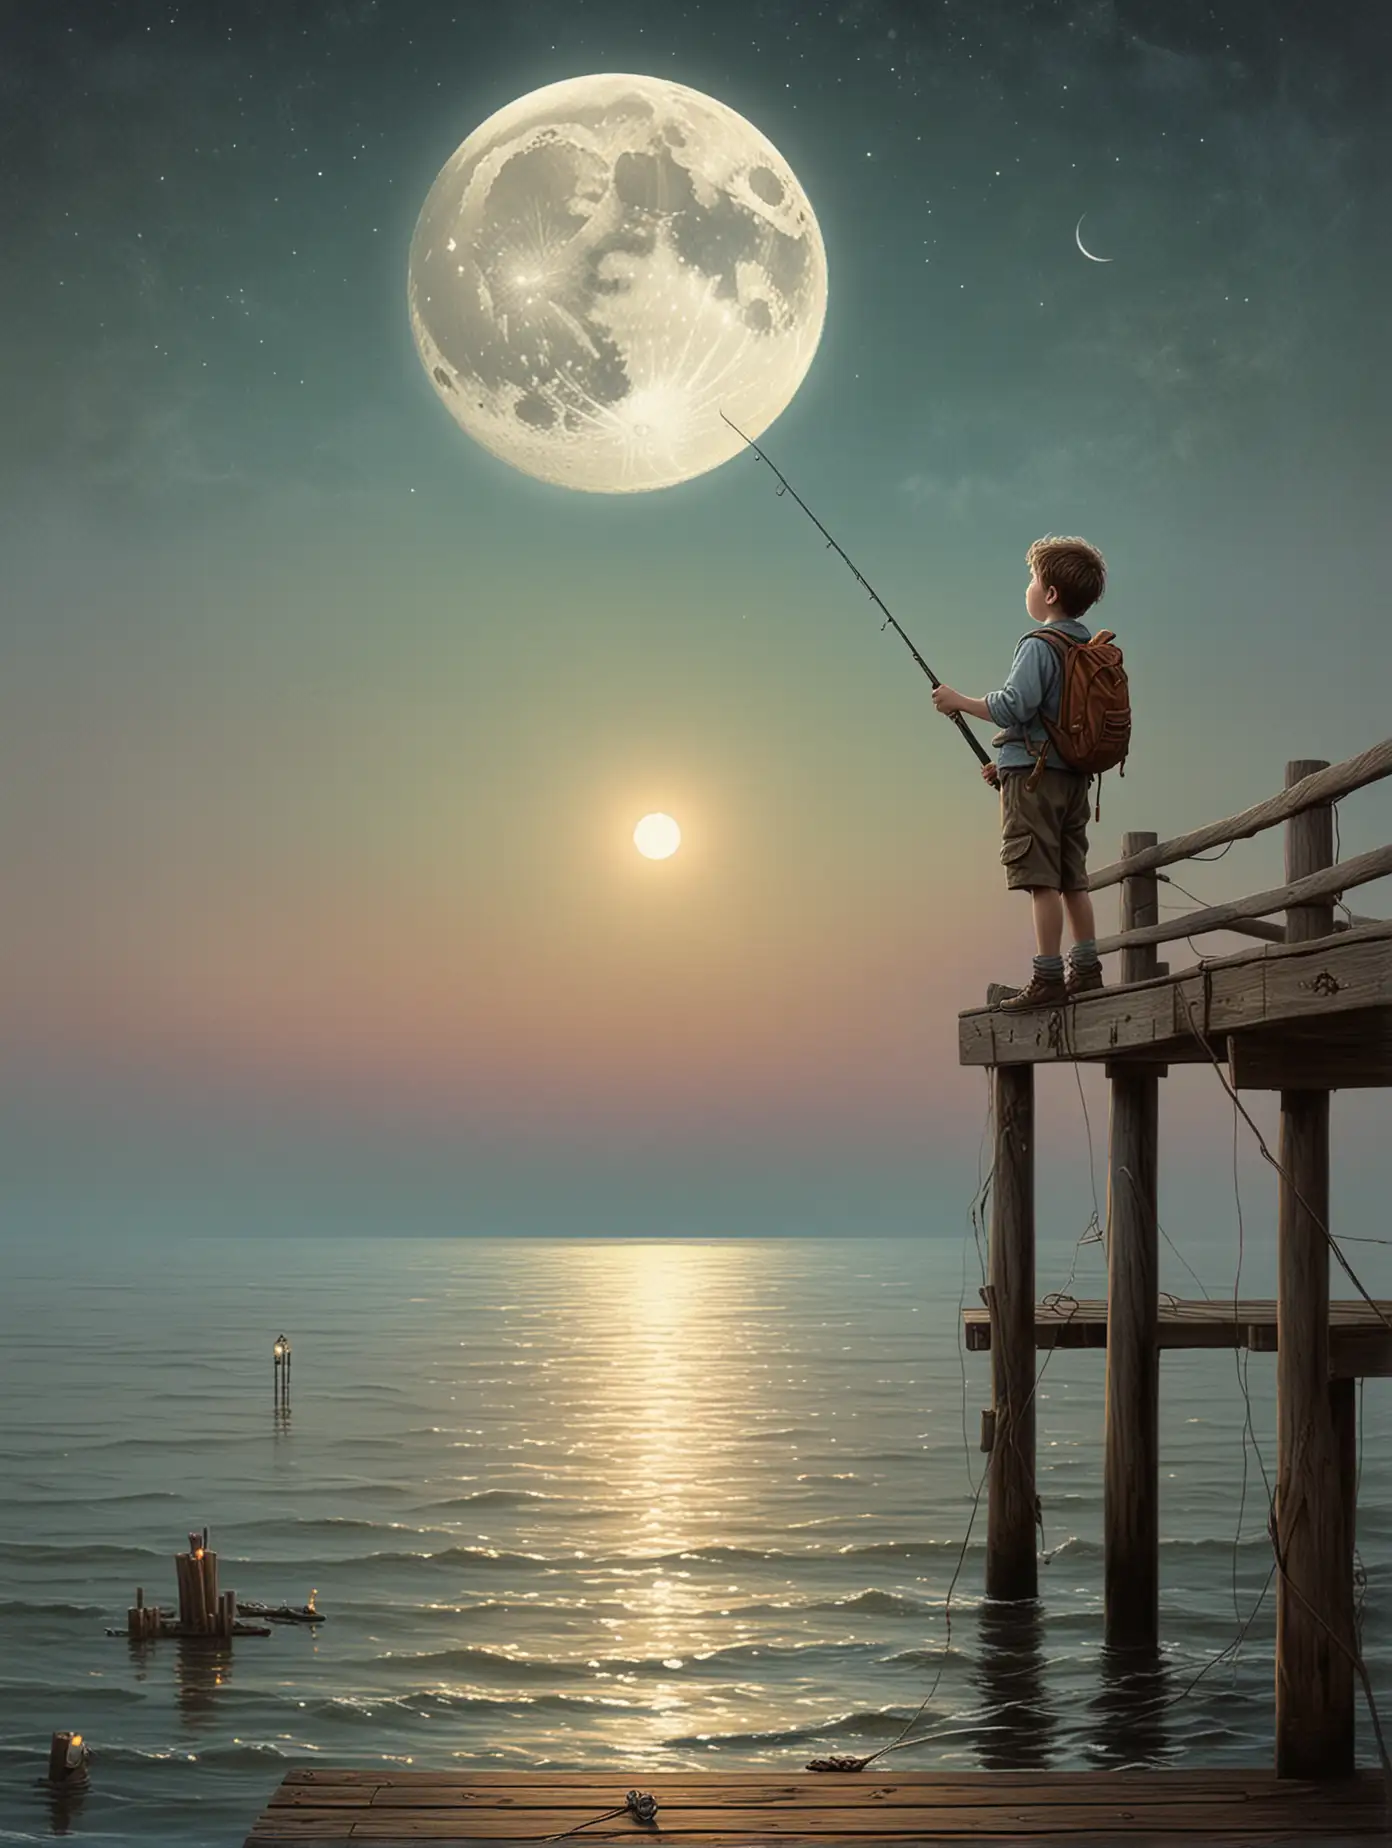 Boy Fishing on Pier Gazing at Moon in Pastel Tones